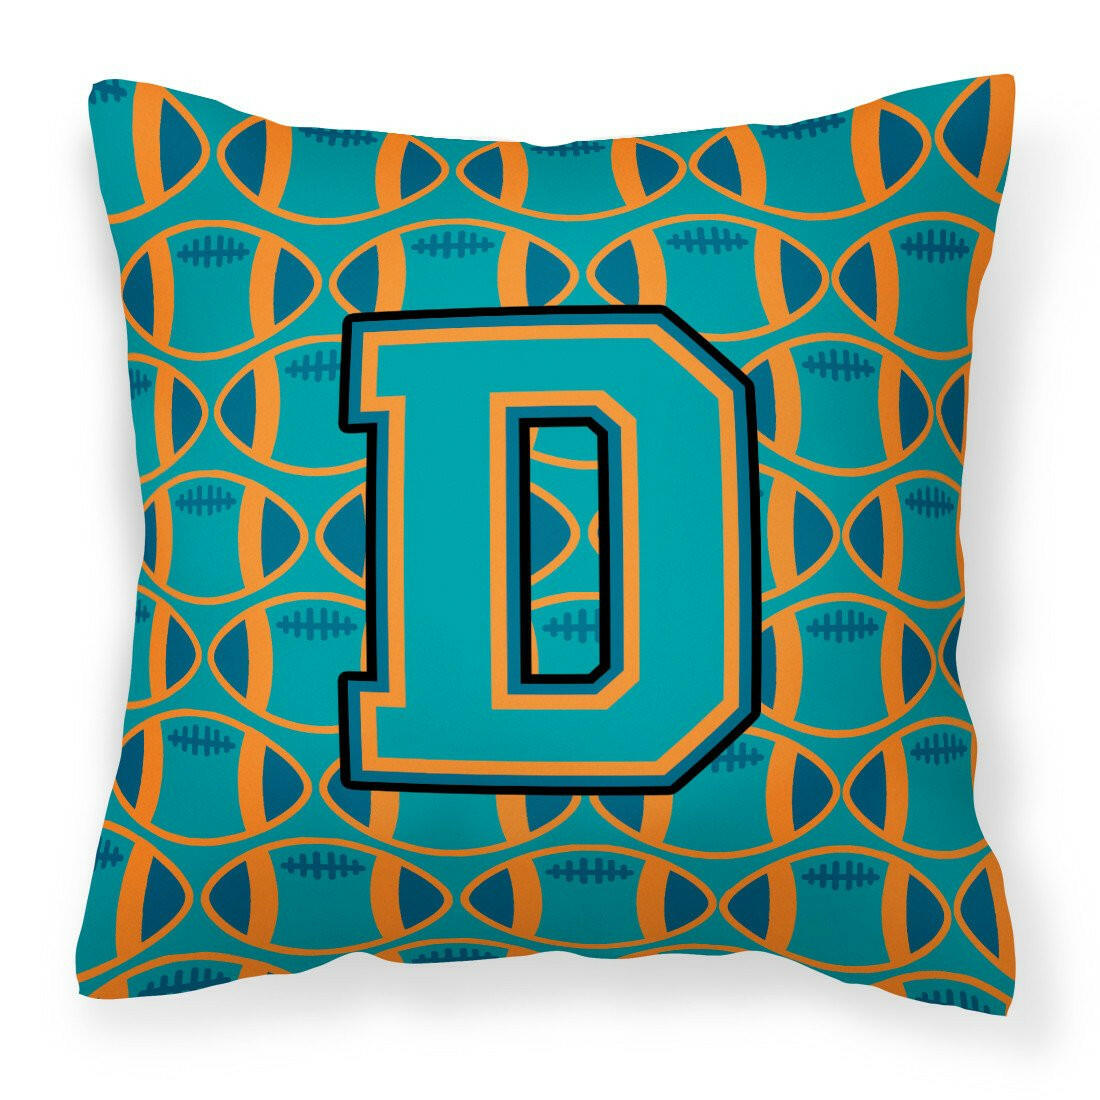 Letter D Football Aqua, Orange and Marine Blue Fabric Decorative Pillow CJ1063-DPW1414 by Caroline's Treasures